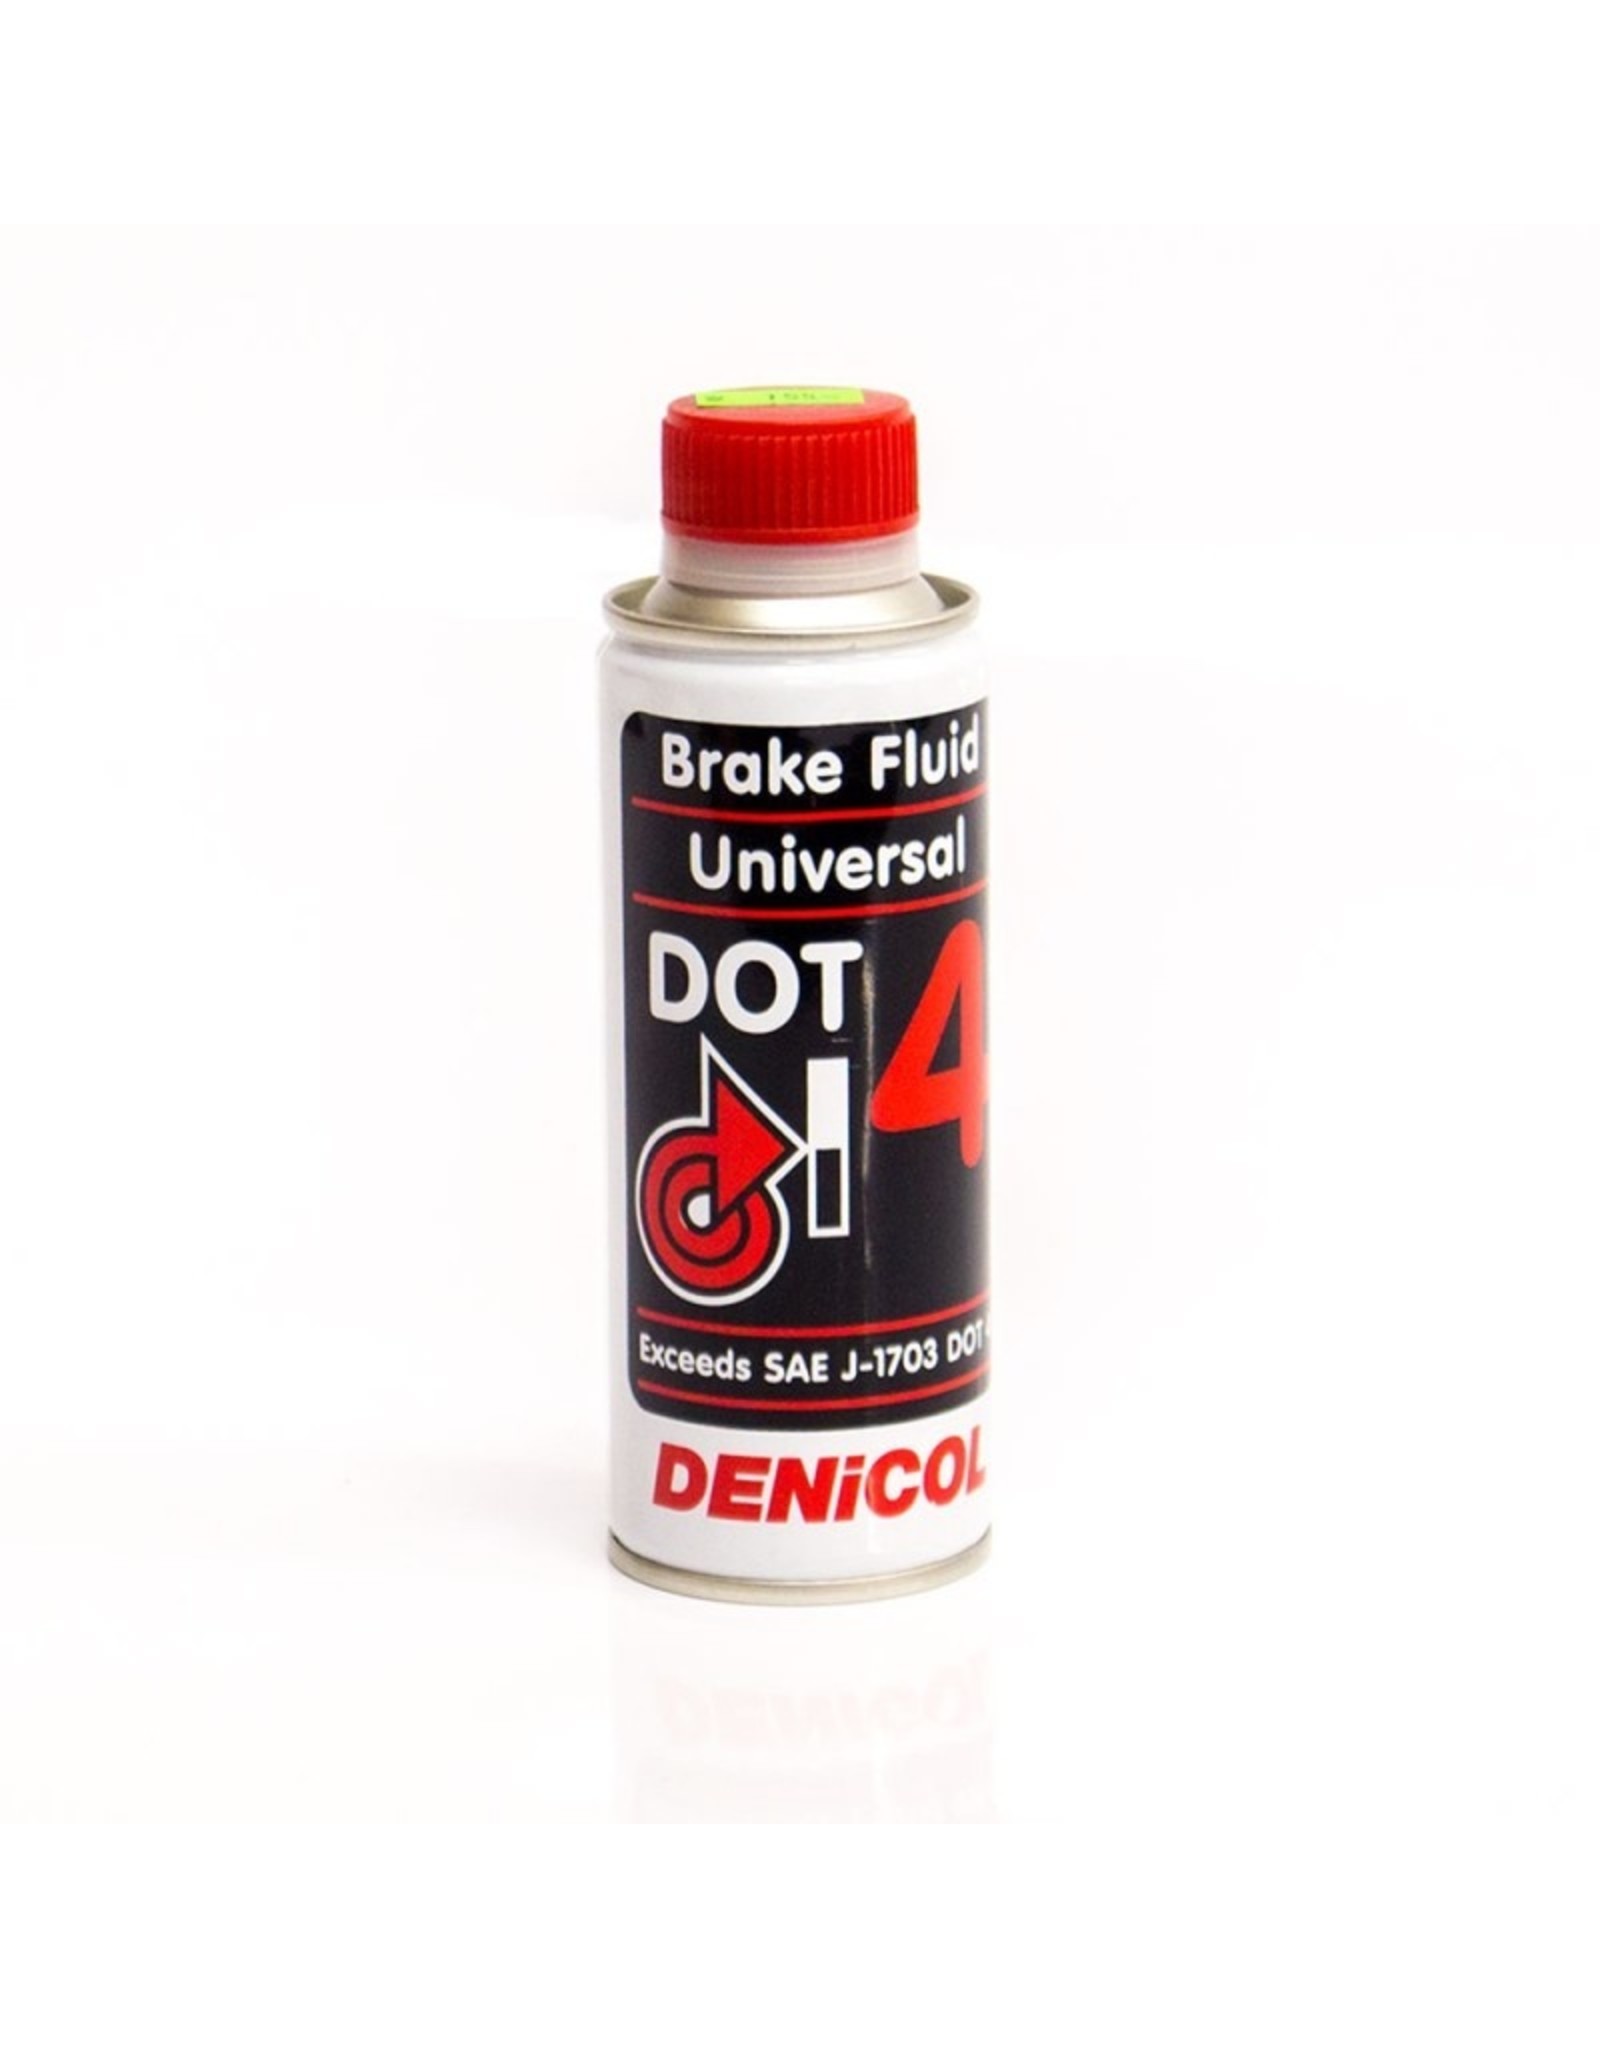 Denicol Denicol Dot 4 remolie 250ML